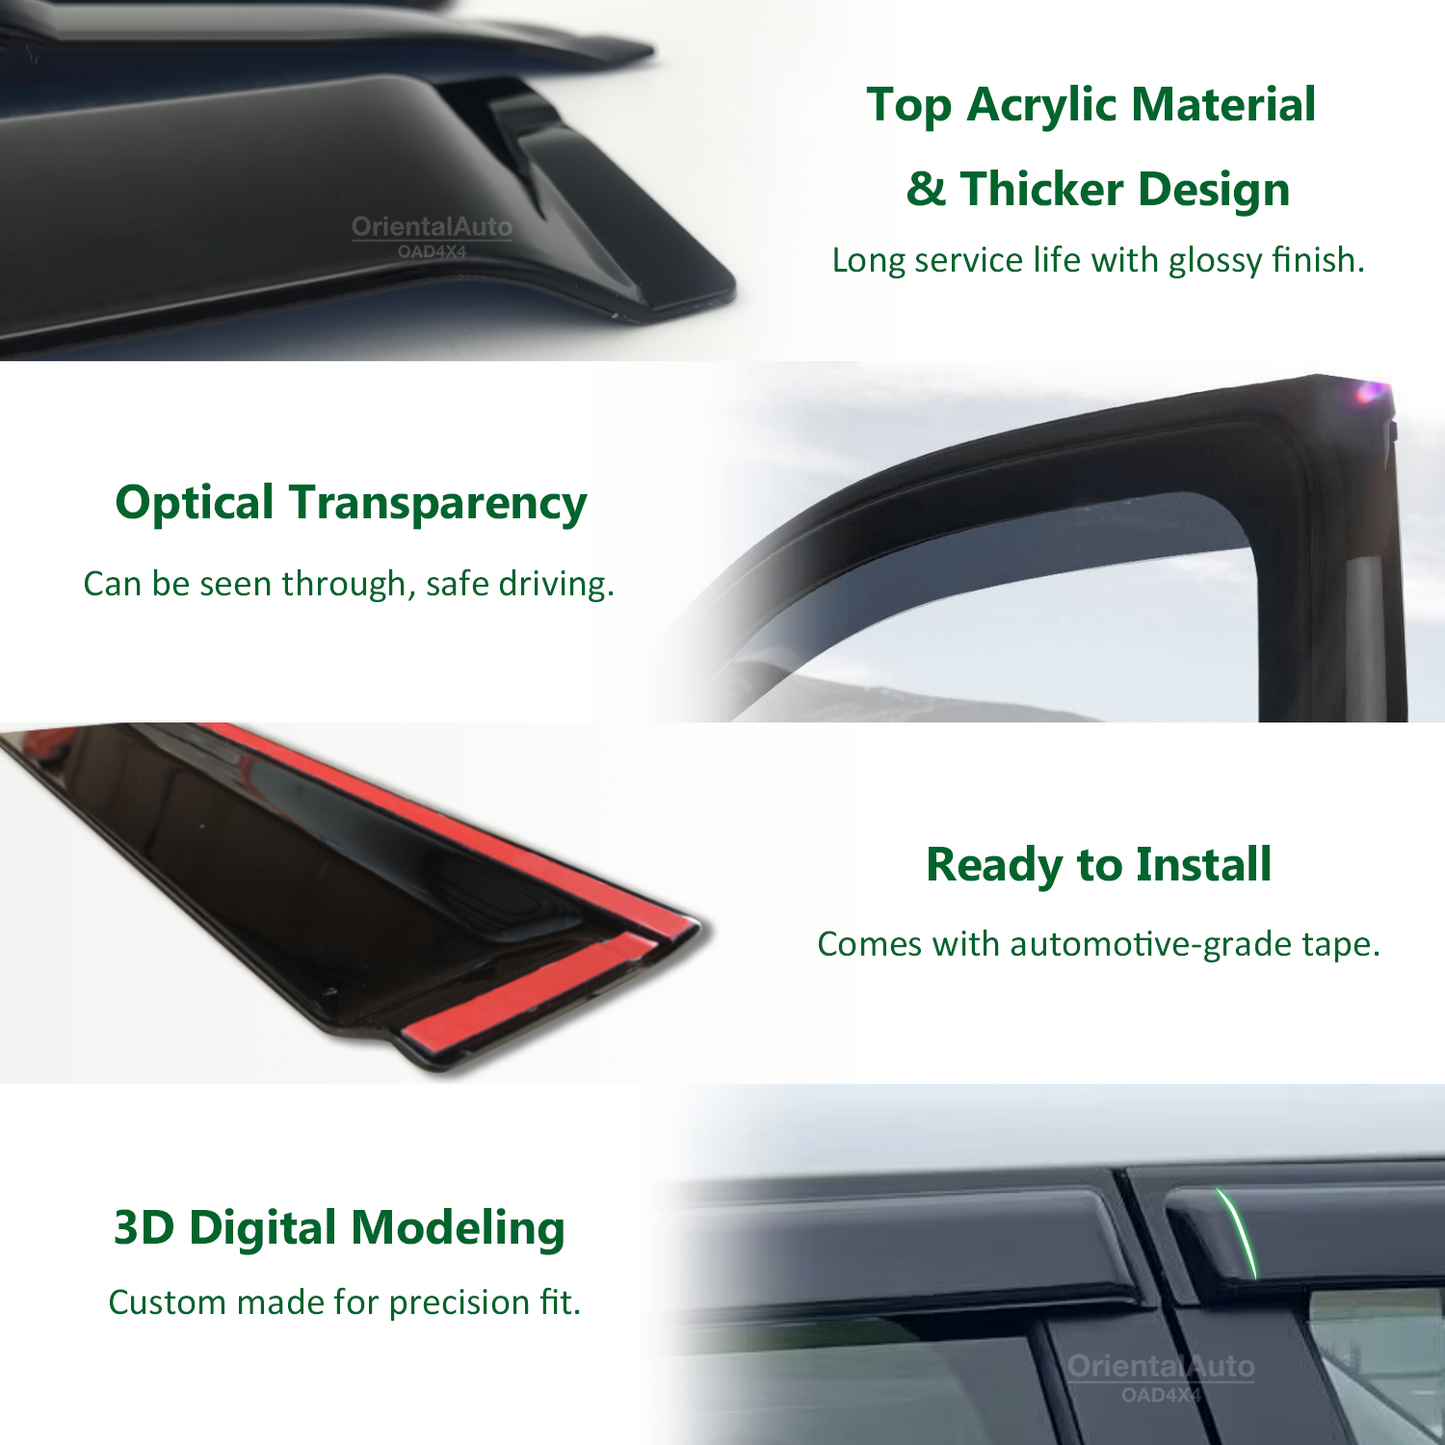 Premium Weather Shields & 3D TPE Cargo Mat For Volkswagen Touareg 7P 2011-2019 Weathershields Window Visor Boot Mat